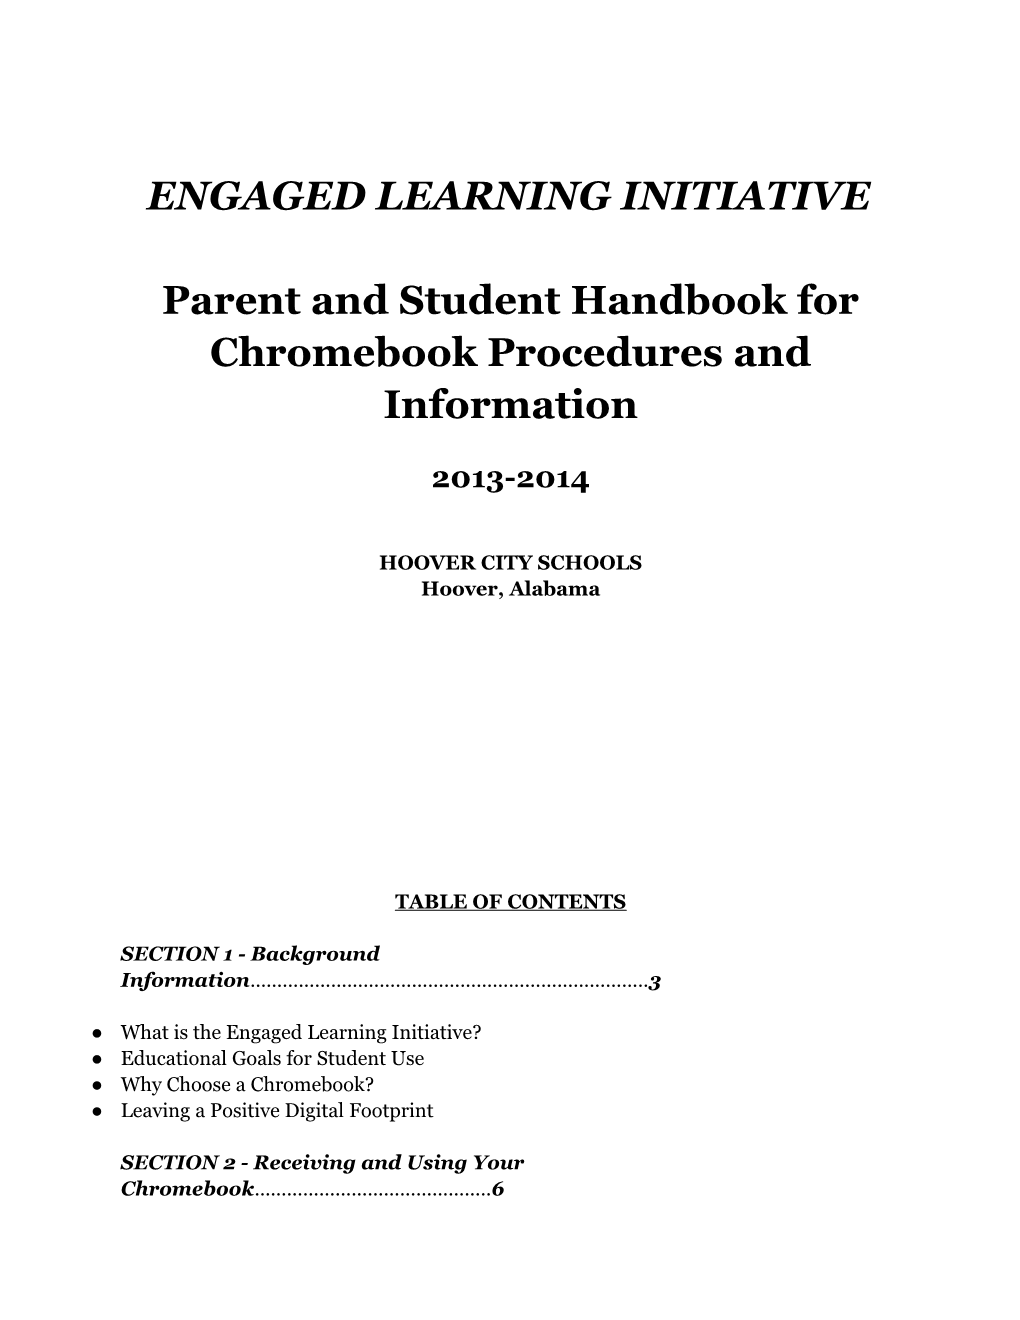 HCS Chromebook Handbook